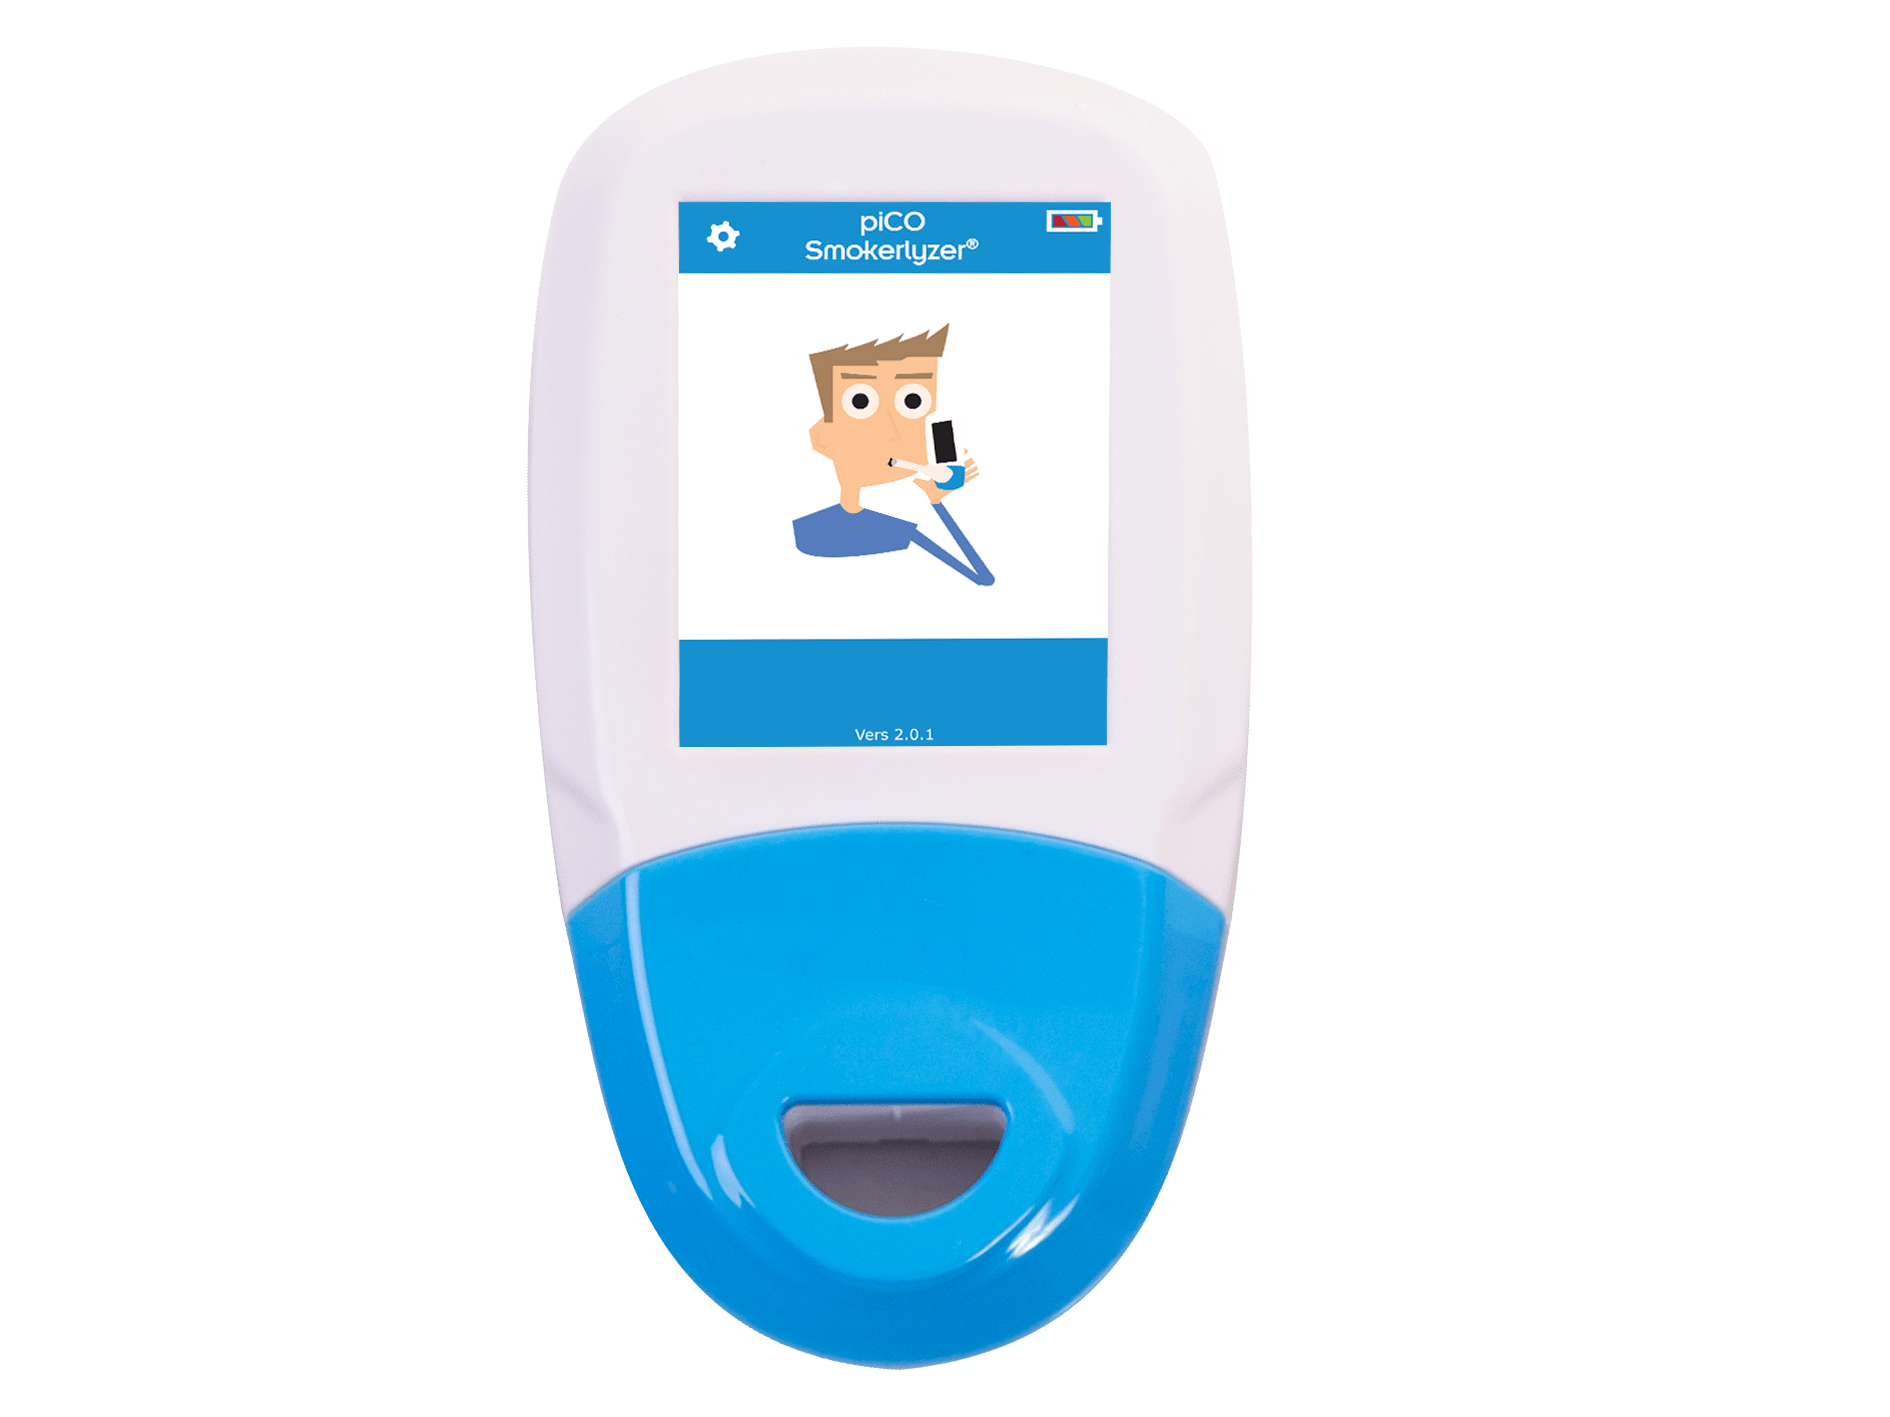 Bedfont's piCO Smokerlyzer CO Breath Test Monitor